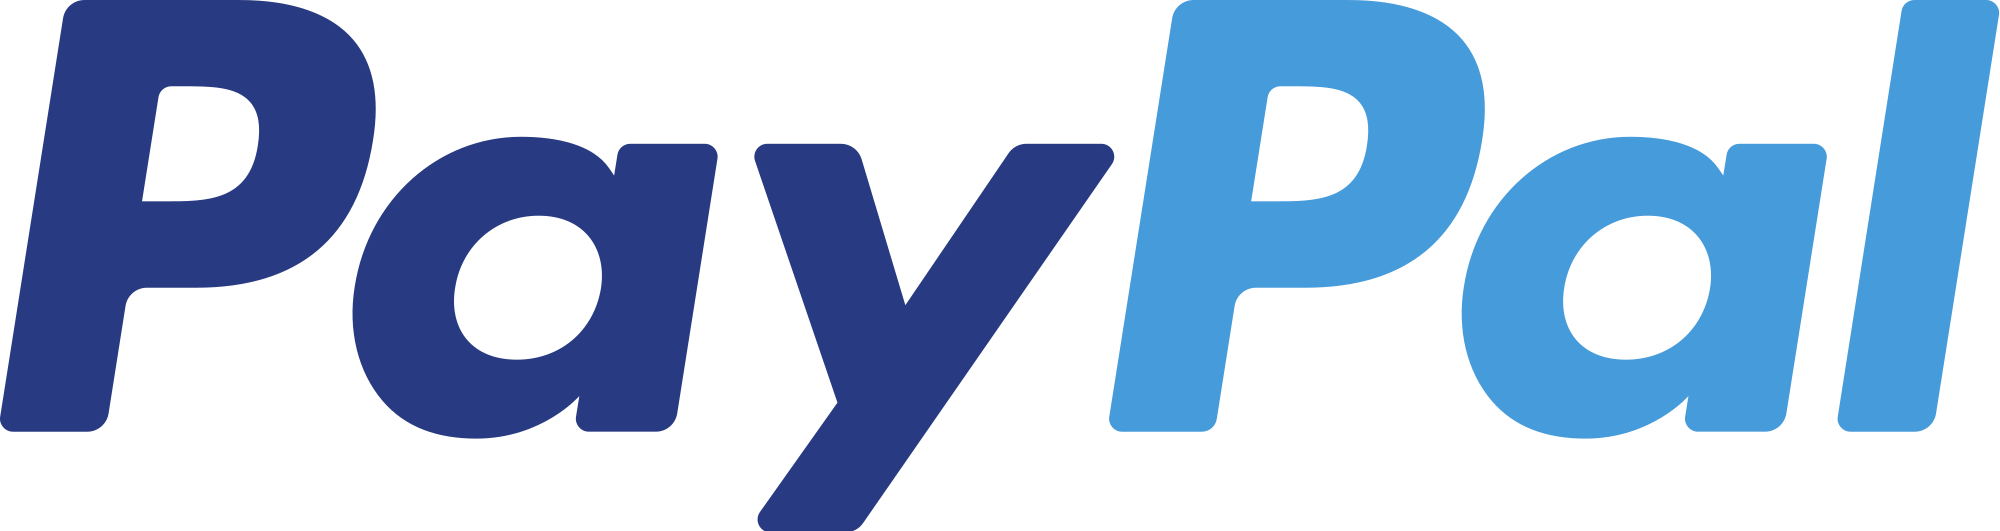 Paypal Verified Logo Paypal Icon Symbols Emblem Png Free Transparent Png Logos